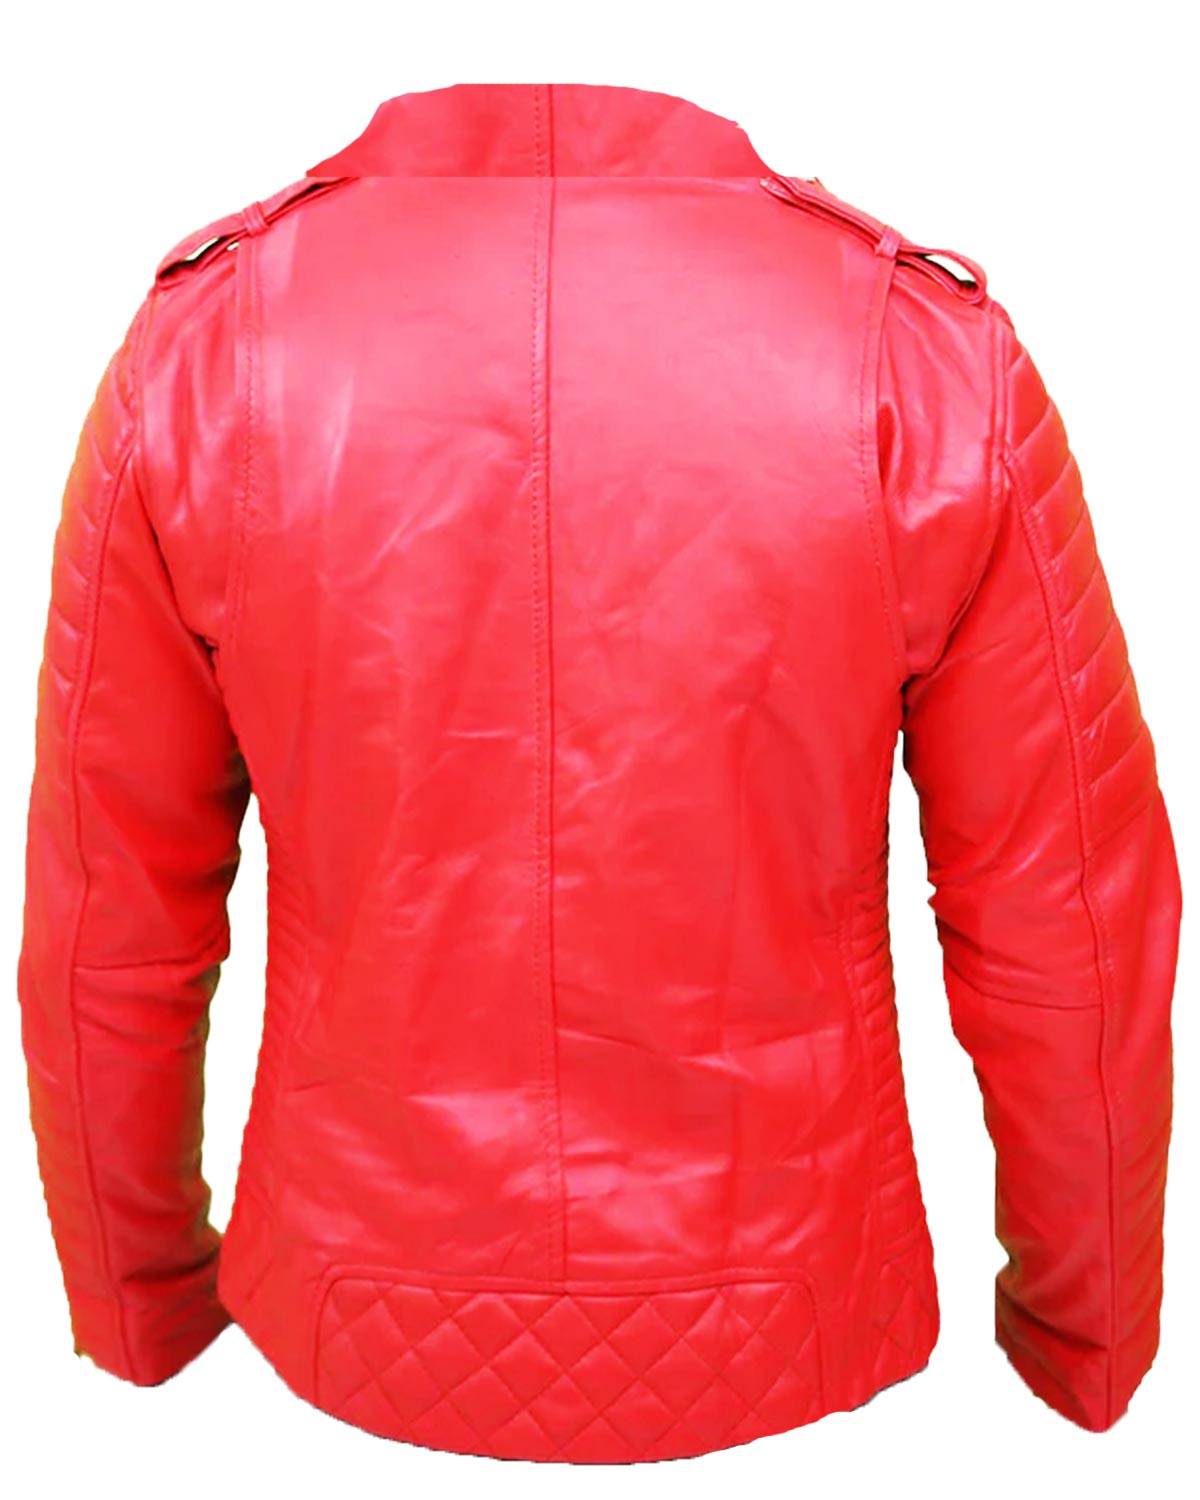 Men's Quilted Slim Fit Biker Red Jacket